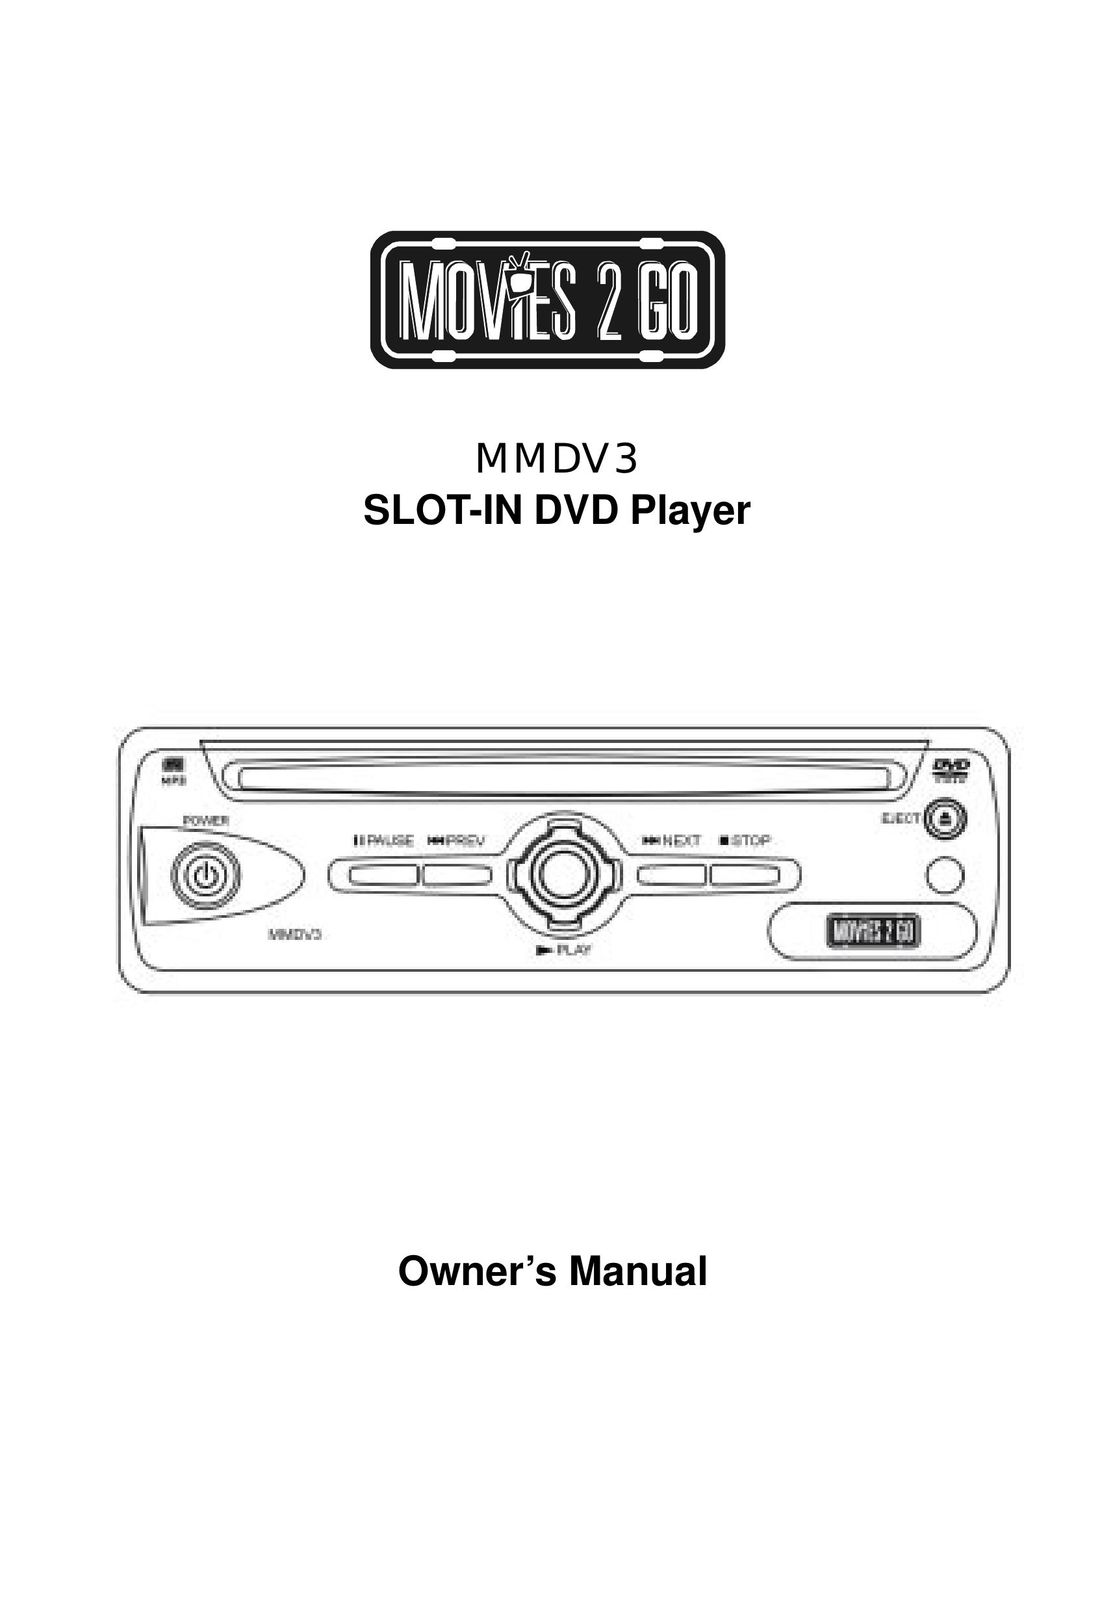 Audiovox MMH56 DVD Player User Manual